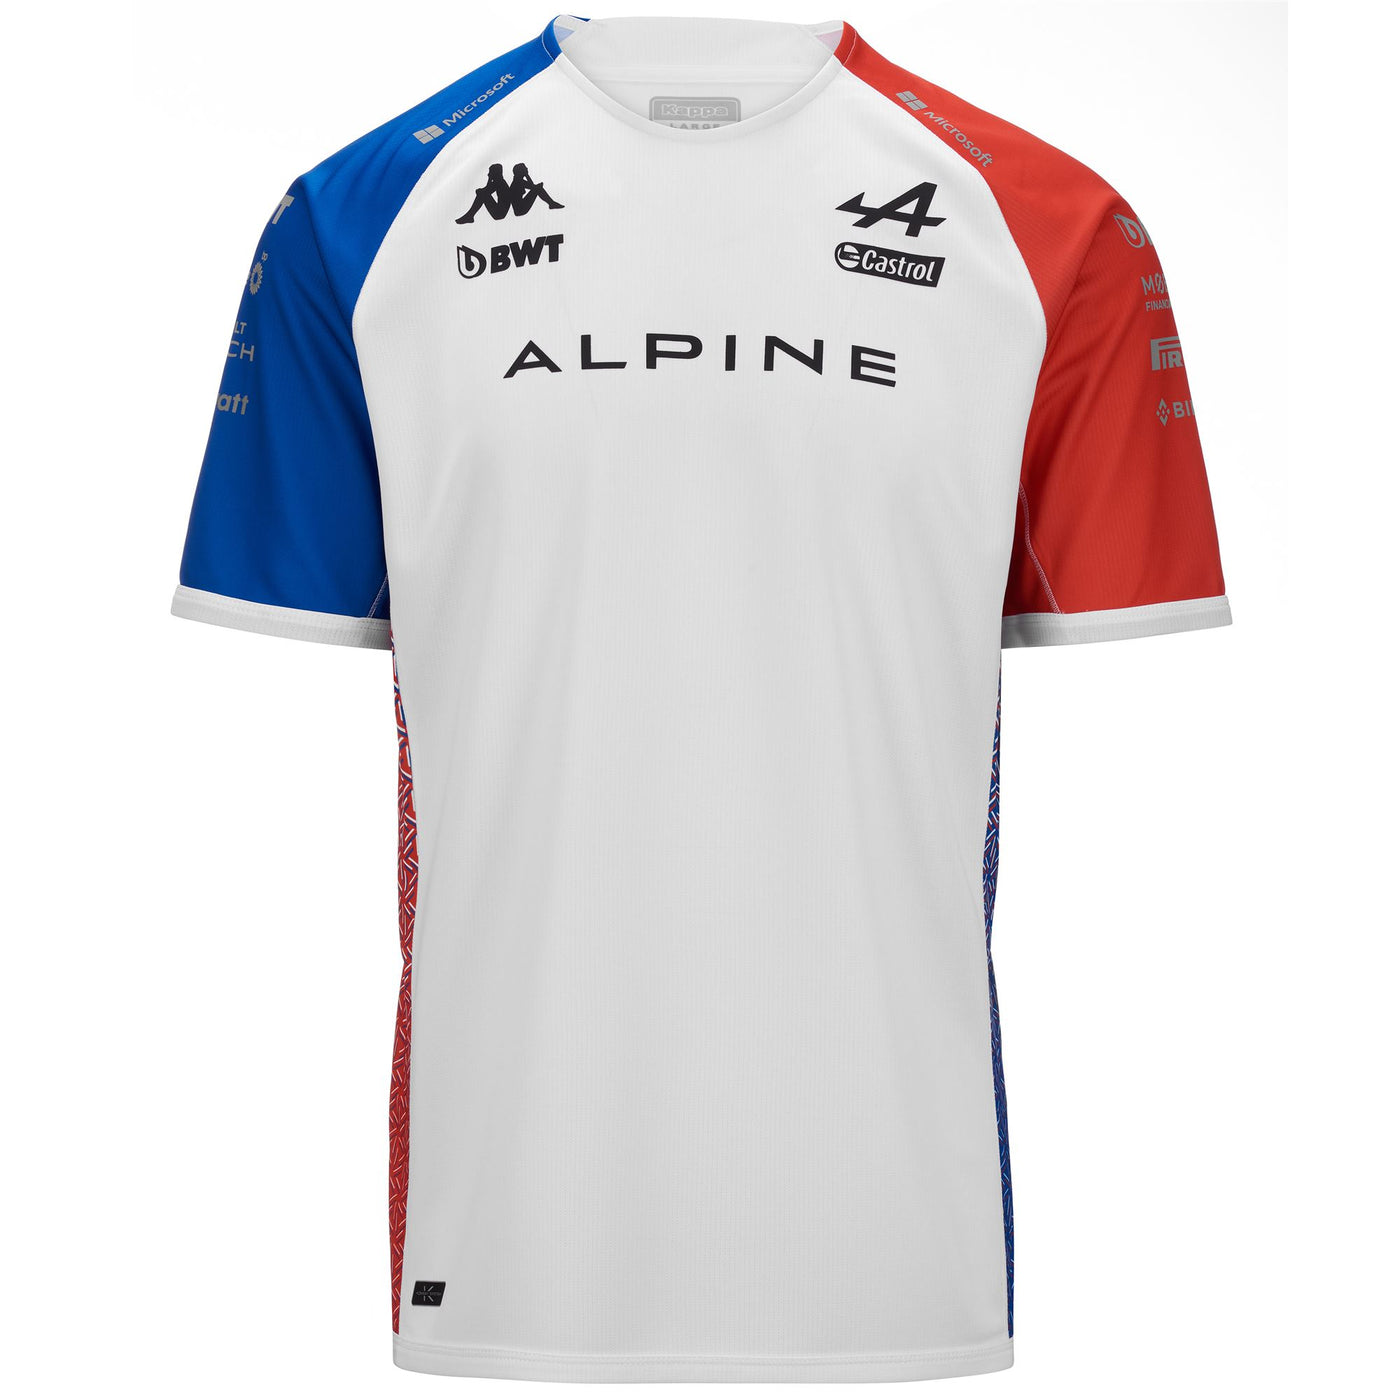 Active Jerseys Man KOMBAT OCON ALPINE F1 Shirt WHITE - BLUE ROYAL MARINE - ORANGE REDDISH Photo (jpg Rgb)			